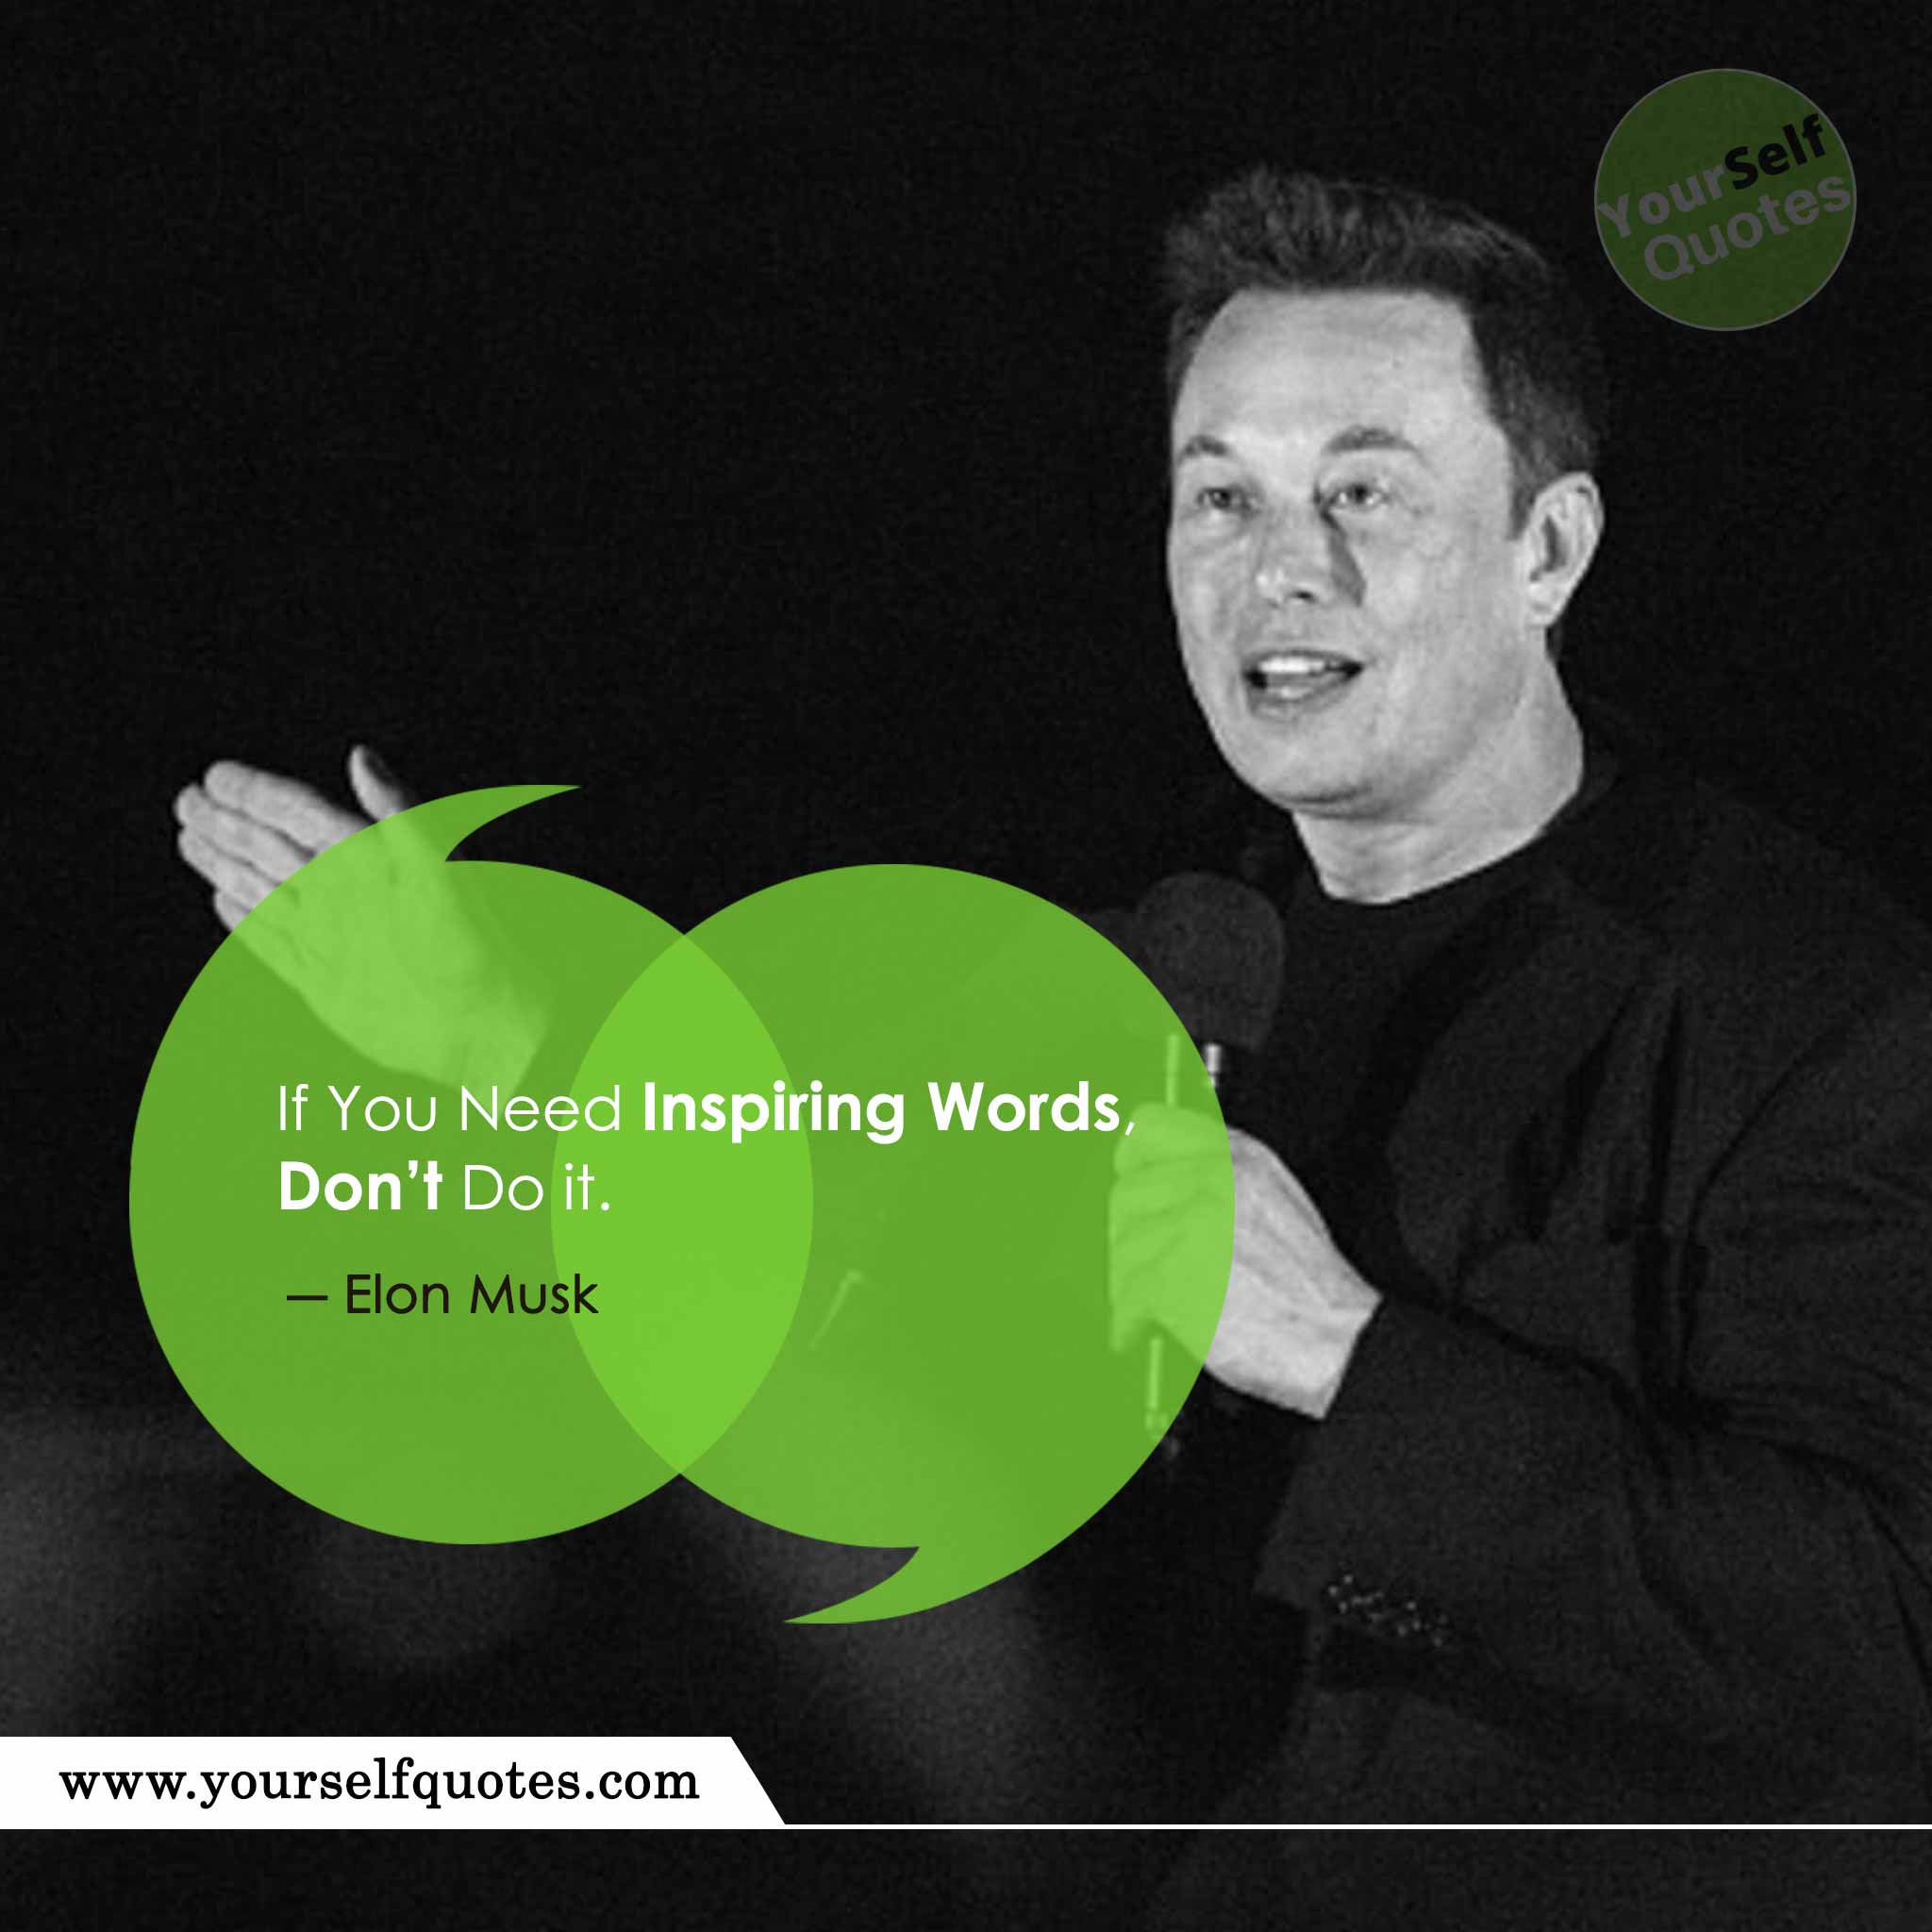 Elon Musk inspiring Words Quote